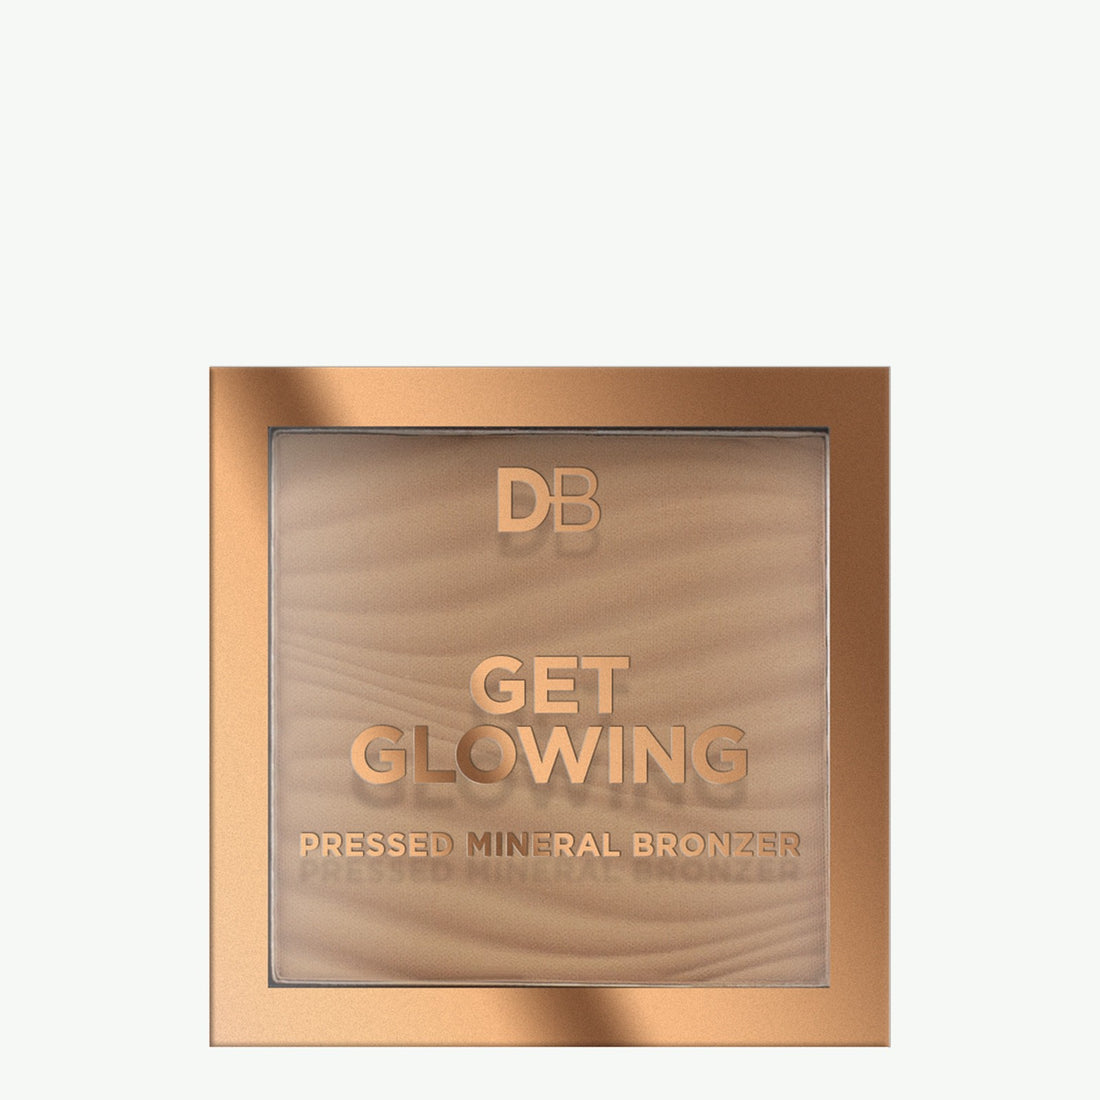 DB Get Glowing Pressed Mineral Bronzer